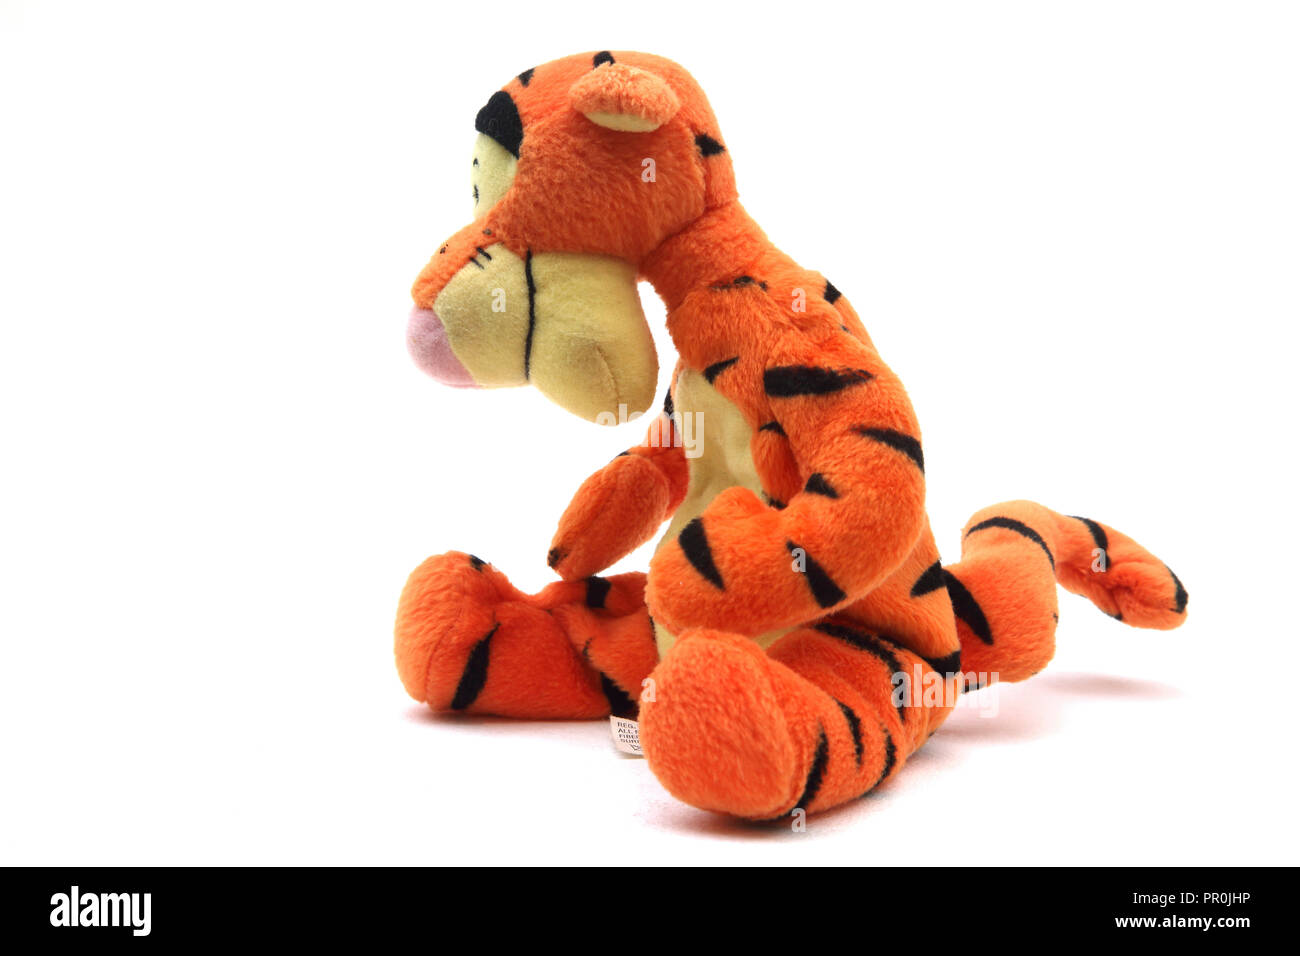 Disney's Tigger Toy Stock Photo